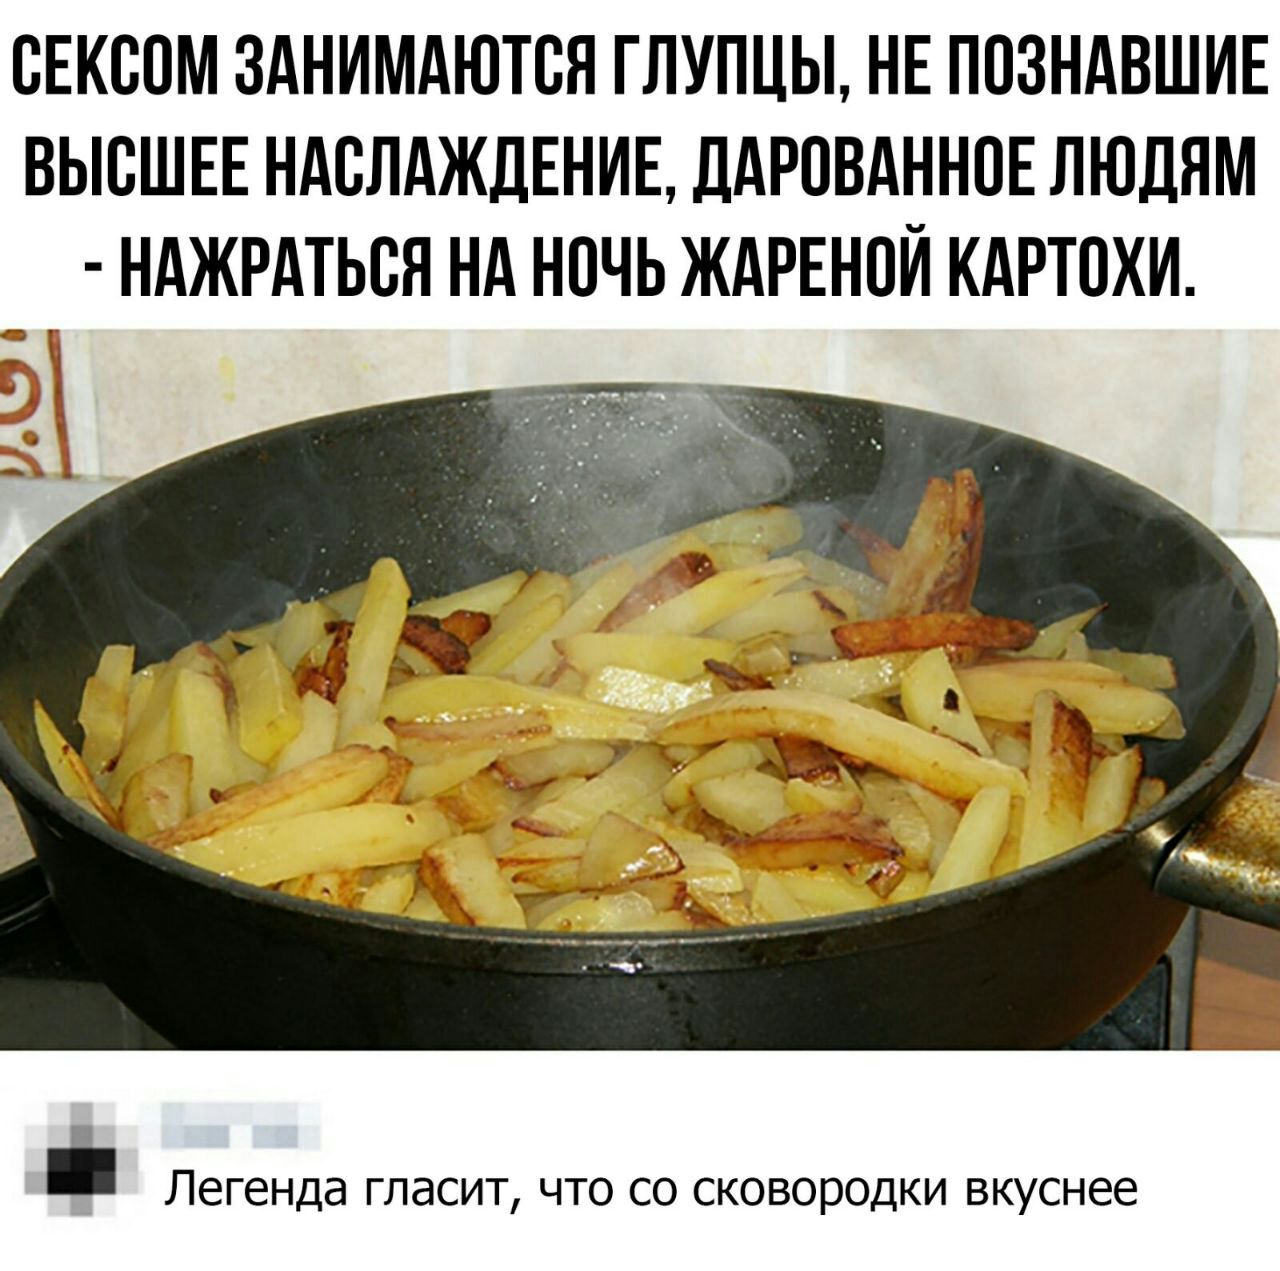 Почему после жареной. Жареная картошка Мем. Жареная картошка прикол. Мемы про жареную картошку. Мем сковородка жареной картошки.